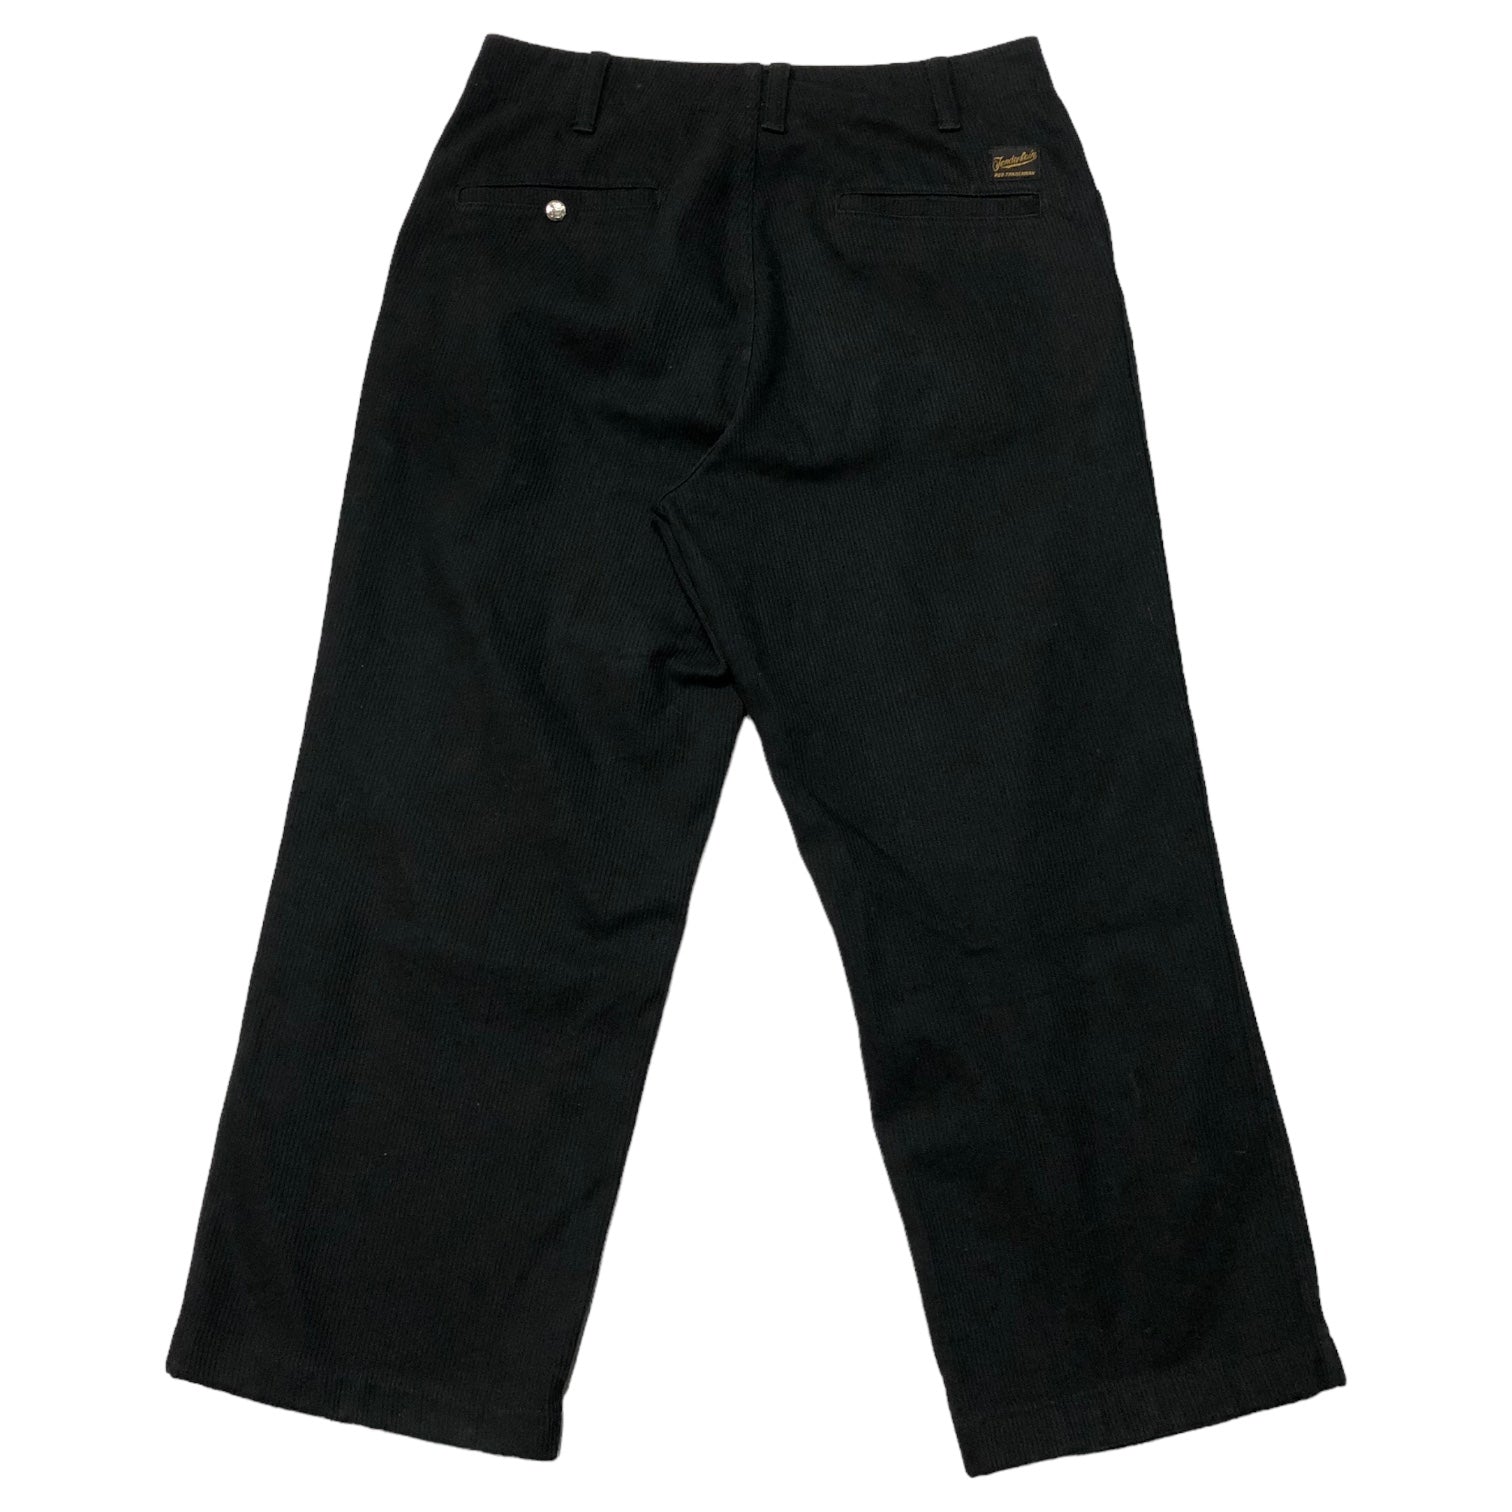 TENDERLOIN(テンダーロイン) straight pique pants ストレート ピケパンツ S ブラック